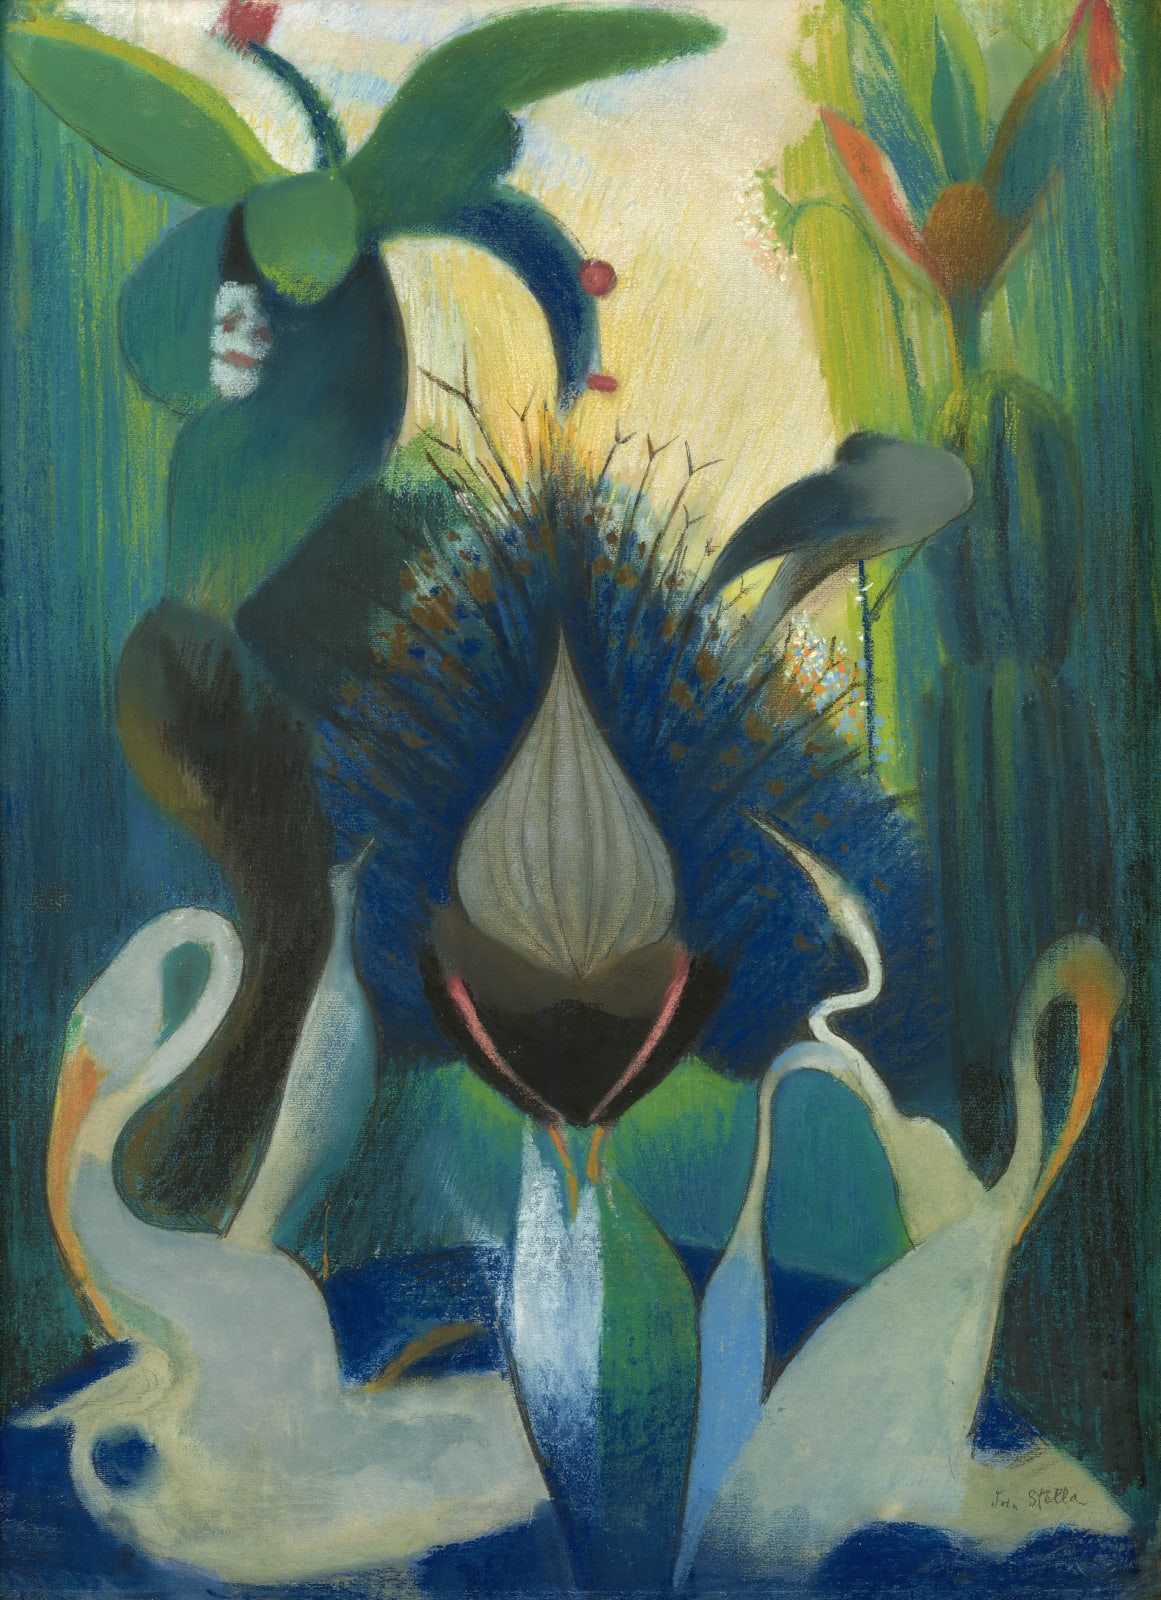 Joseph Stella, The Peacock, 1919